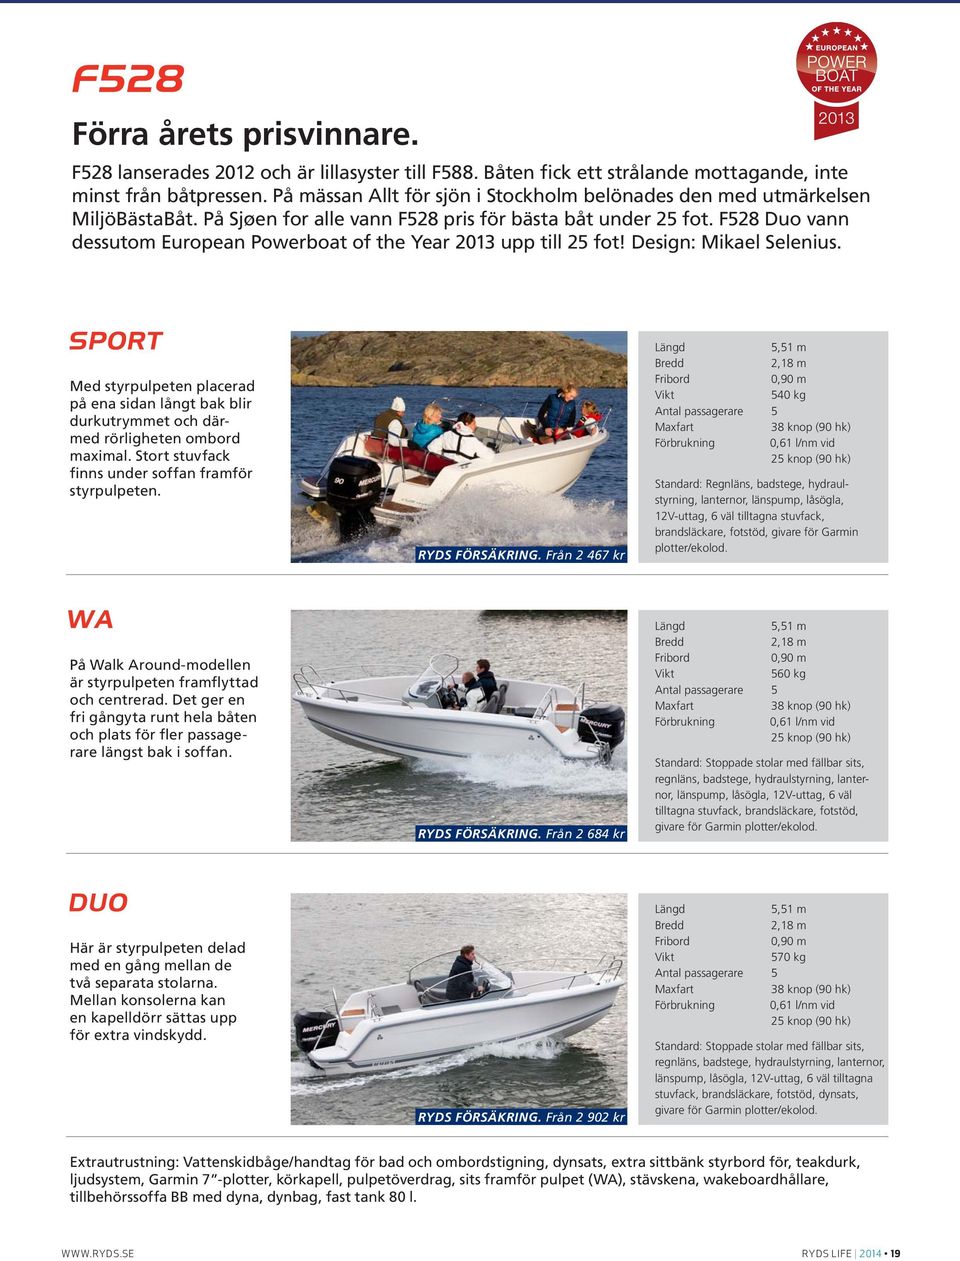 F528 Duo vann dessutom European Powerboat of the Year 2013 upp till 25 fot! Design: Mikael Selenius.